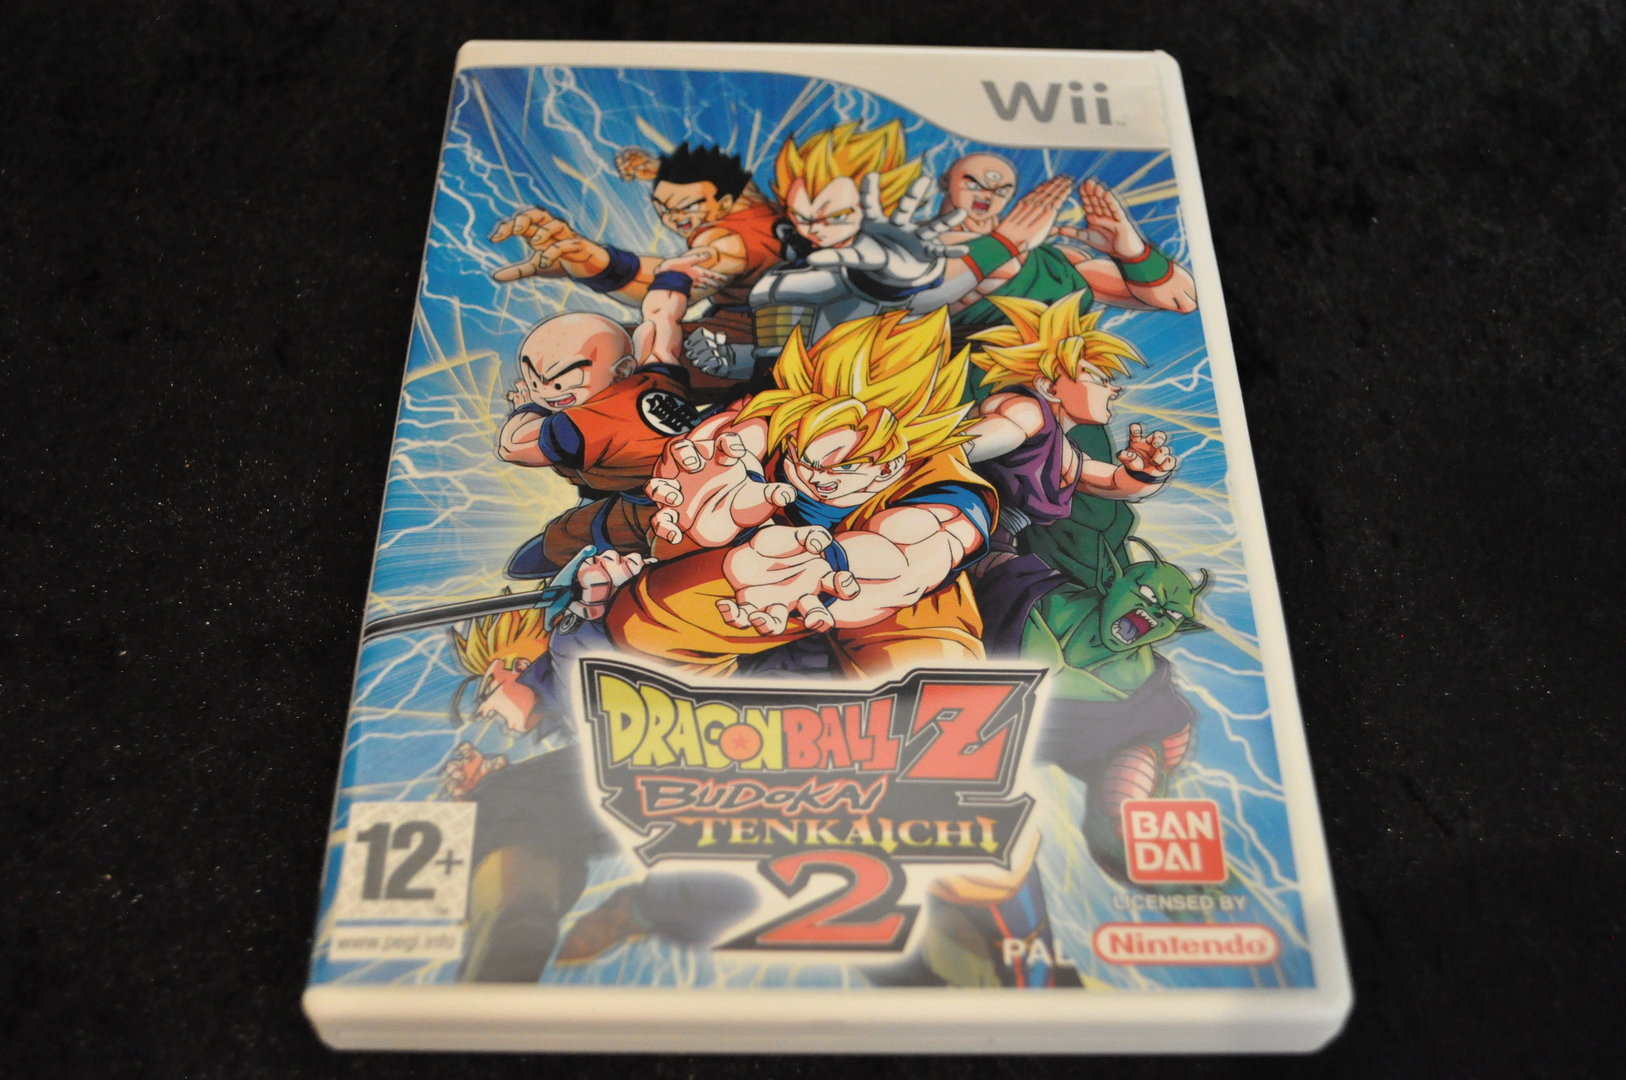 koud chocola vroegrijp Nintendo Wii Game Dragon Ball Z Budokai Tenkaichi 2 - Retrogameking.com |  Retro,Games,Consoles,Collectables